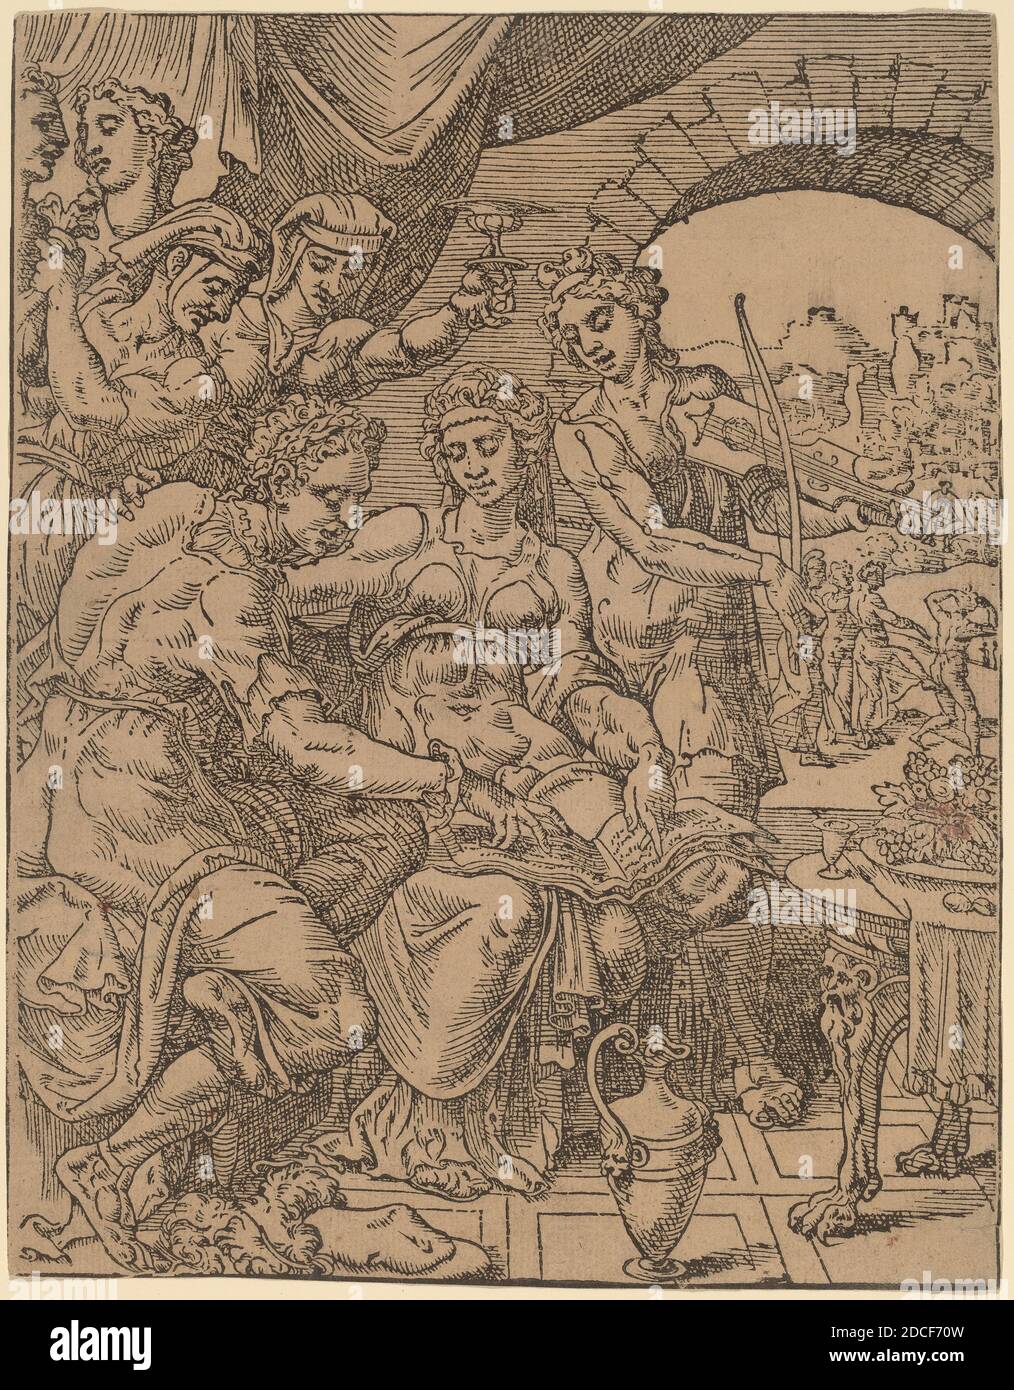 Dirck Volckertz Coornhert, (artist), Netherlandish, 1522 - 1590, Maerten van Heemskerck, (artist after), Netherlandish, 1498 - 1574, The Prodigal Son Squandering His Inheritance on Harlots, The Parable of the Prodigal Son, (series), c. 1548, woodcut on brown laid paper, plate: 24 x 18.7 cm (9 7/16 x 7 3/8 in Stock Photo